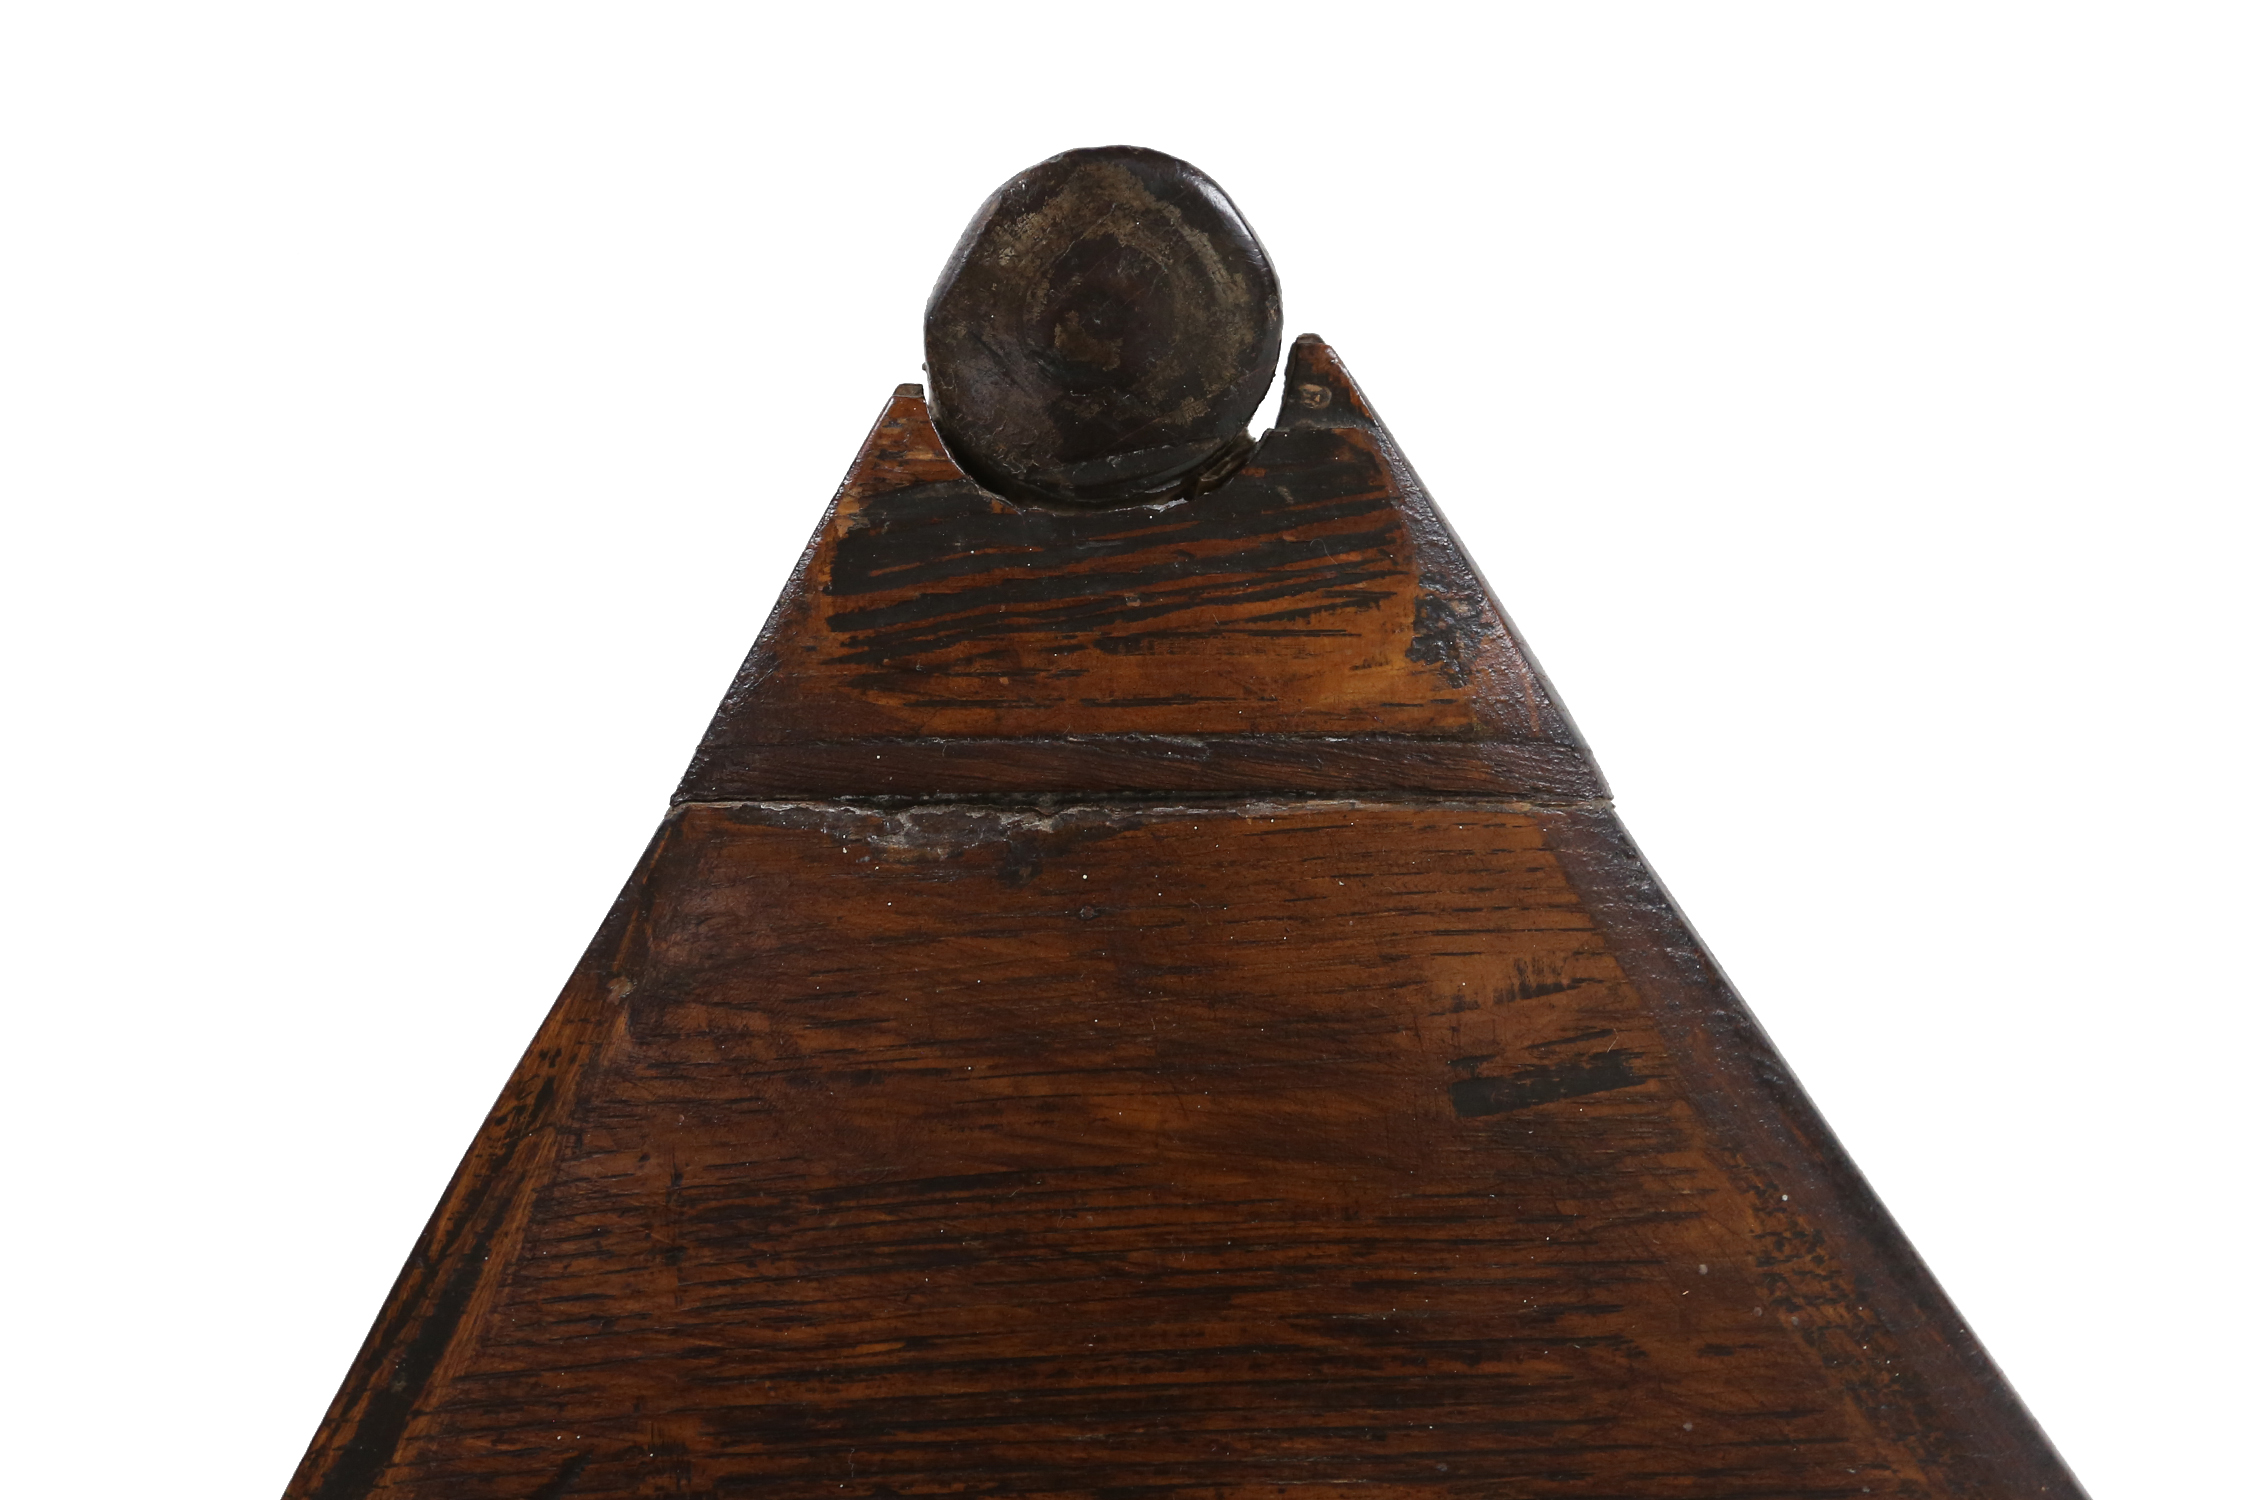 Antique wooden stool Ca.1850thumbnail